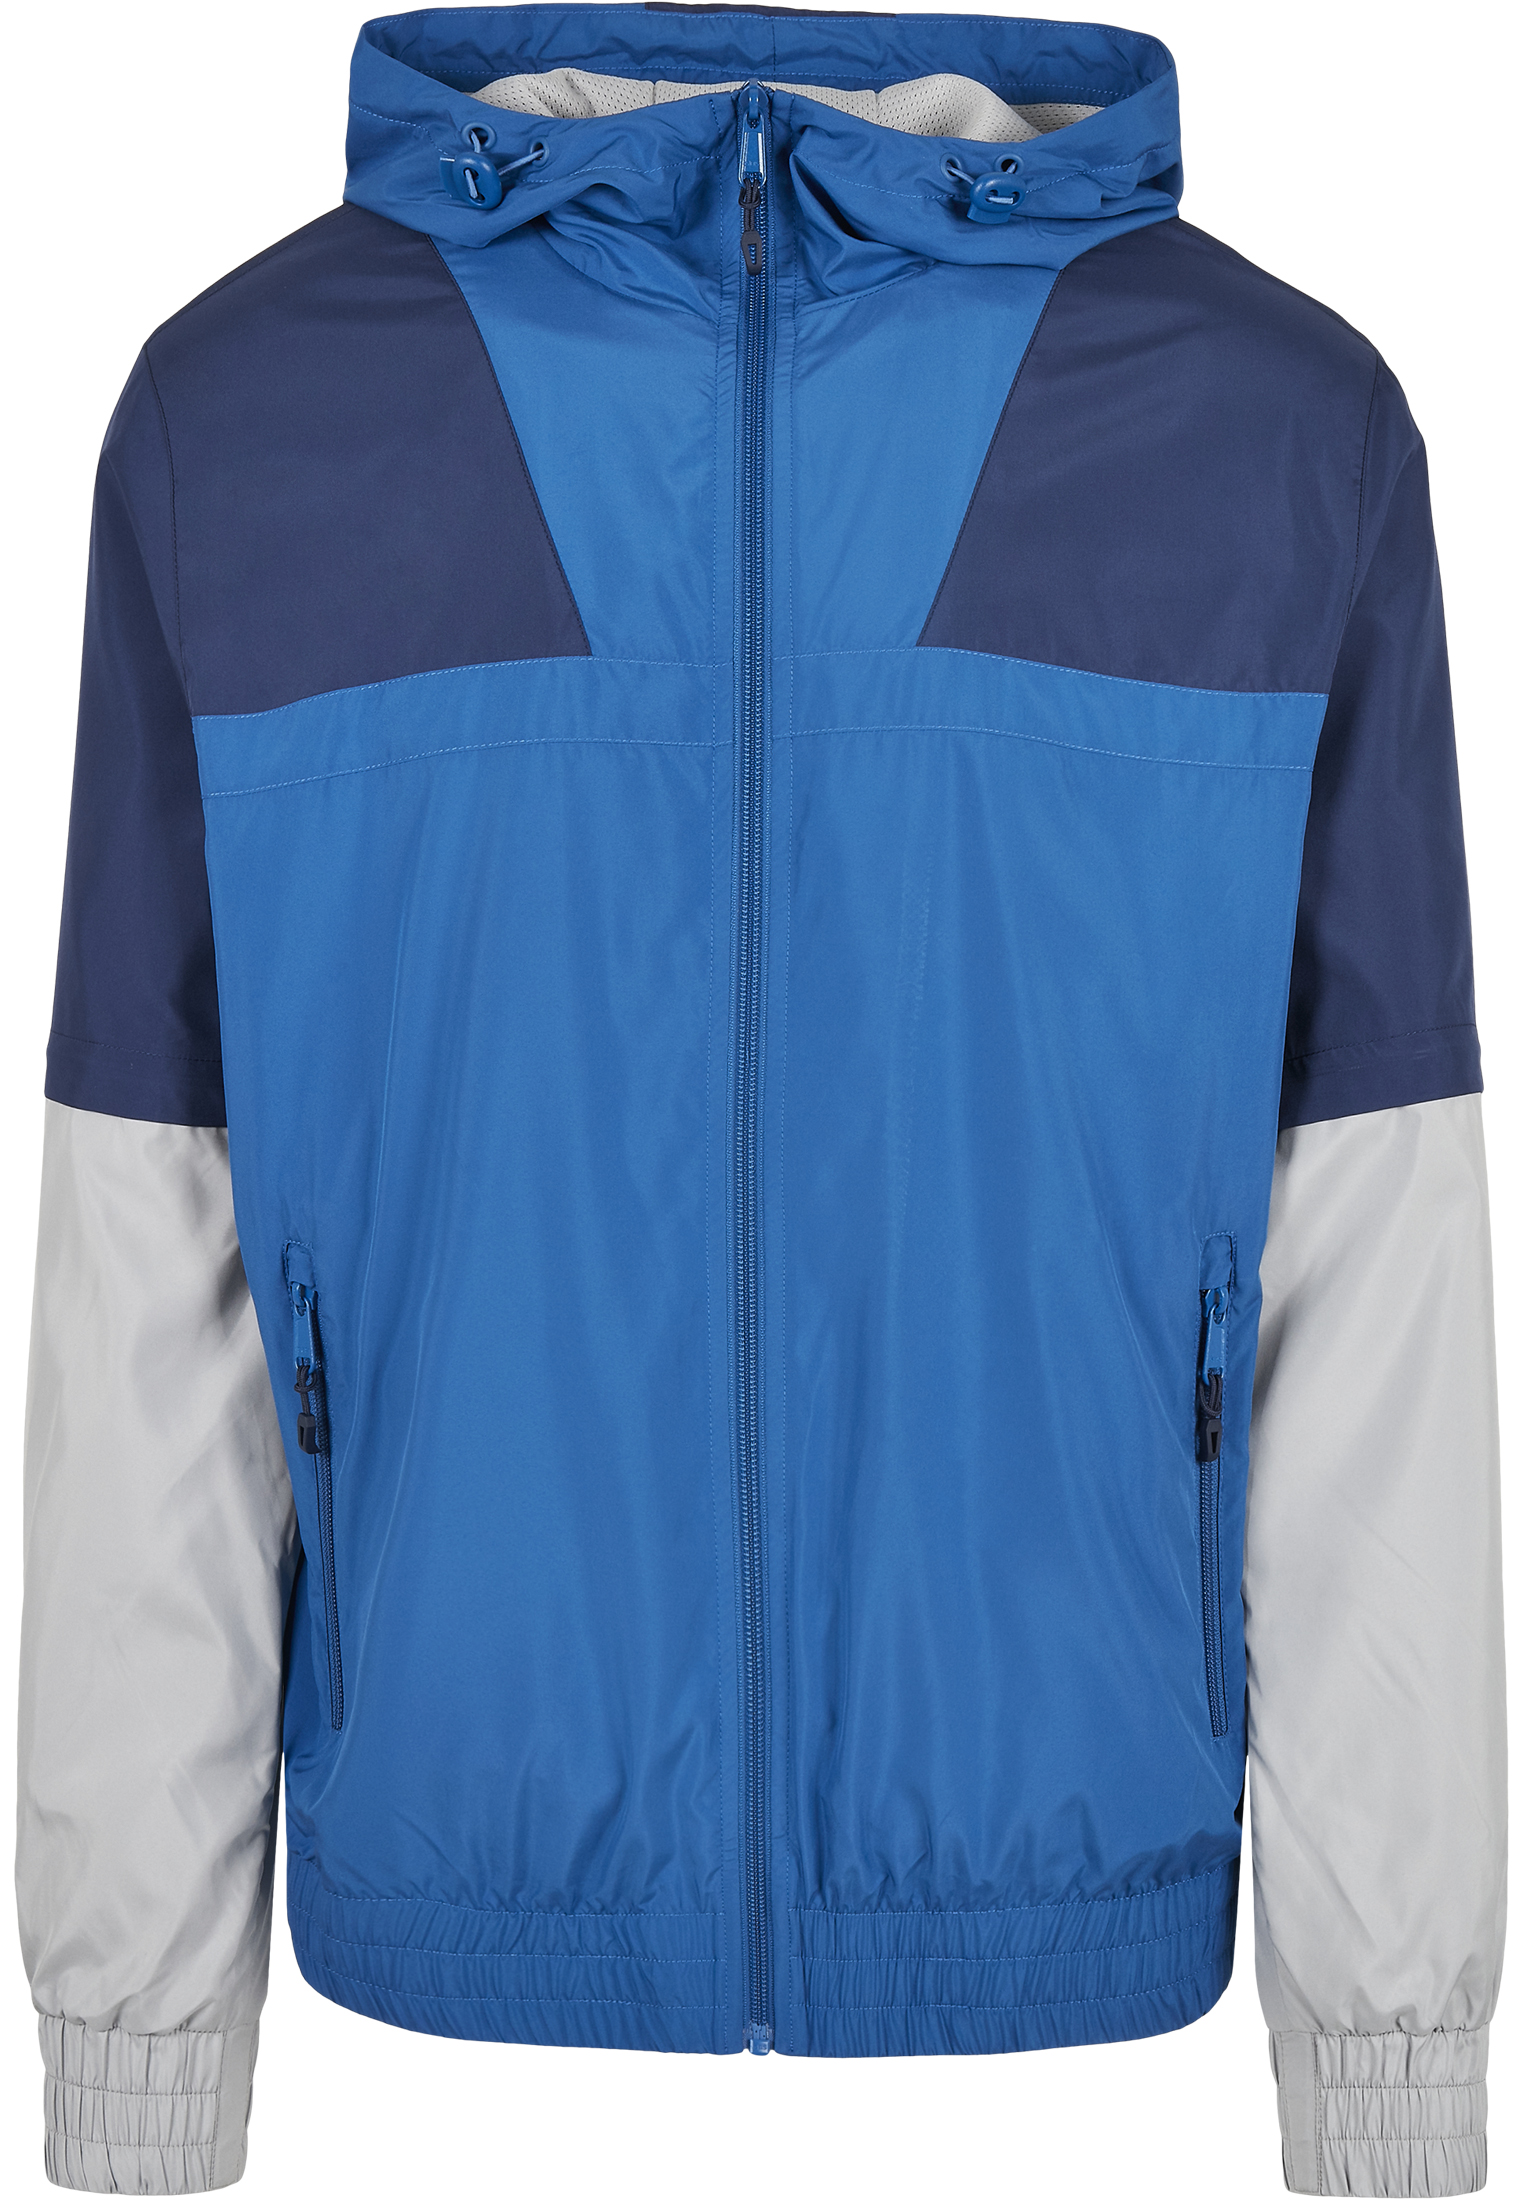 Light Jackets Zip Away Track Jacket in Farbe sportyblue/lightasphalt